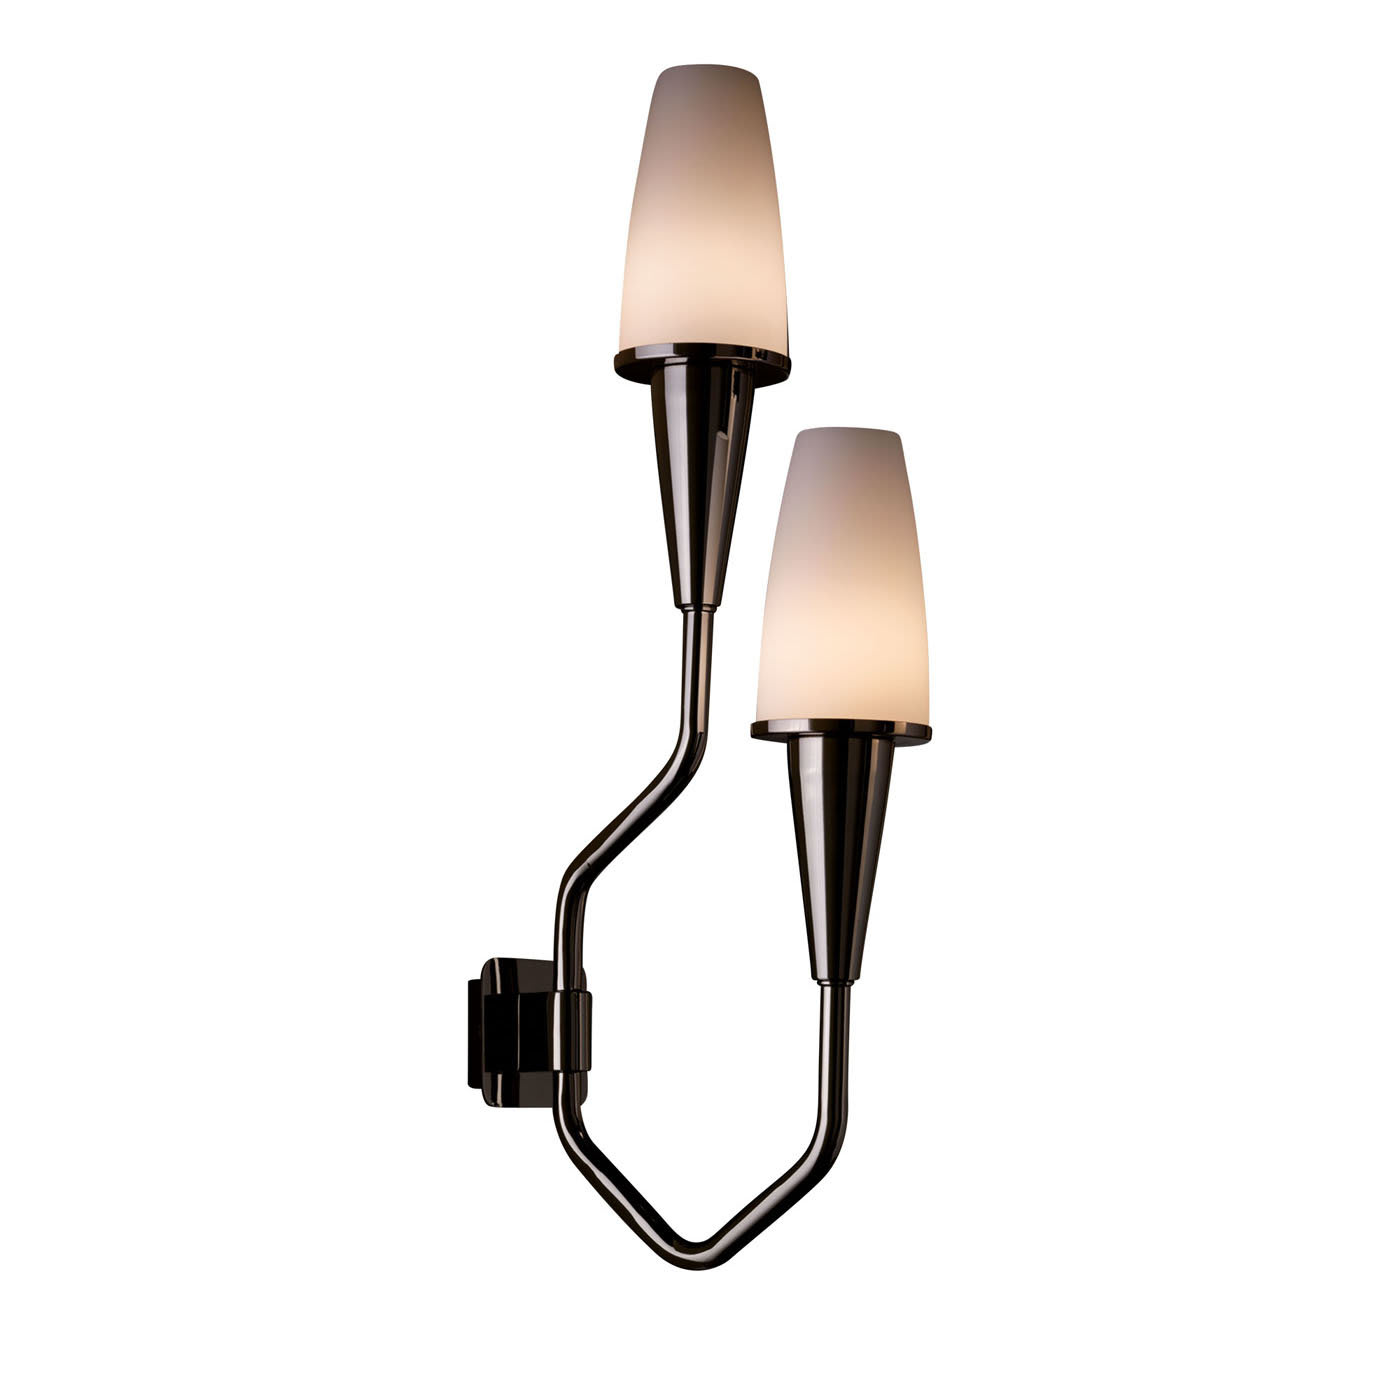 Gio Applique Wall Lamp by Roberto Lazzeroni - Estro